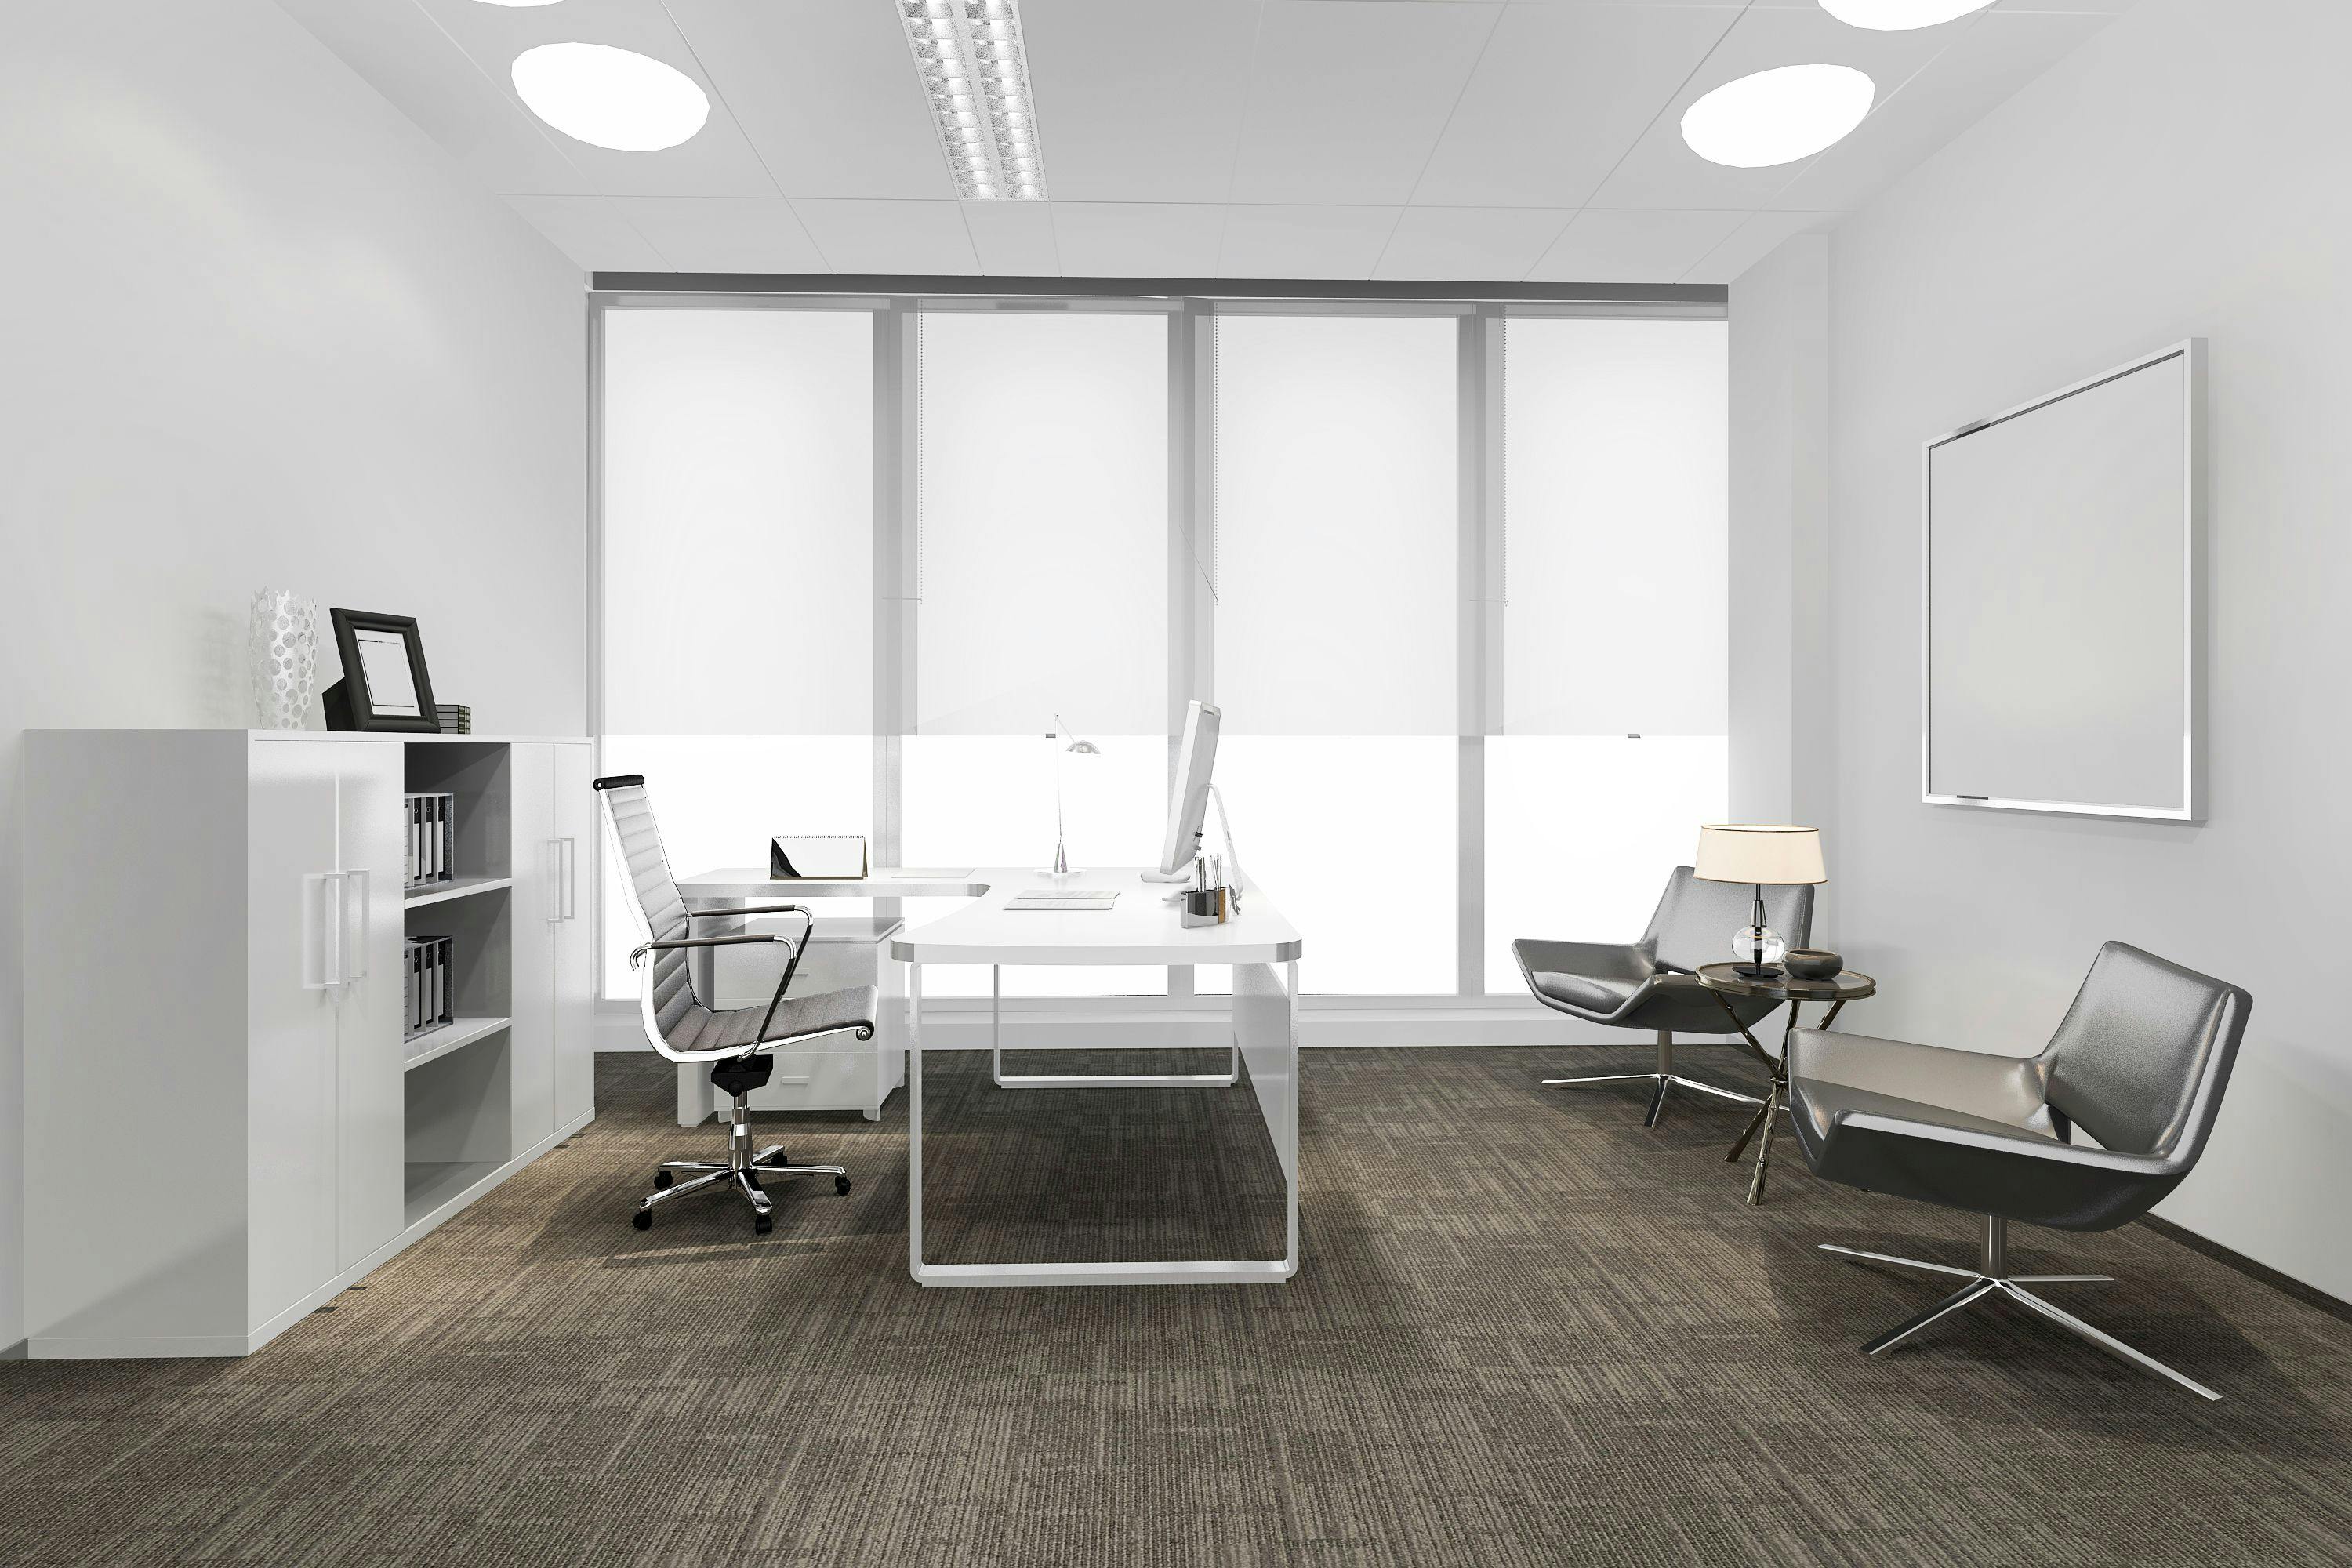 Simple white office design